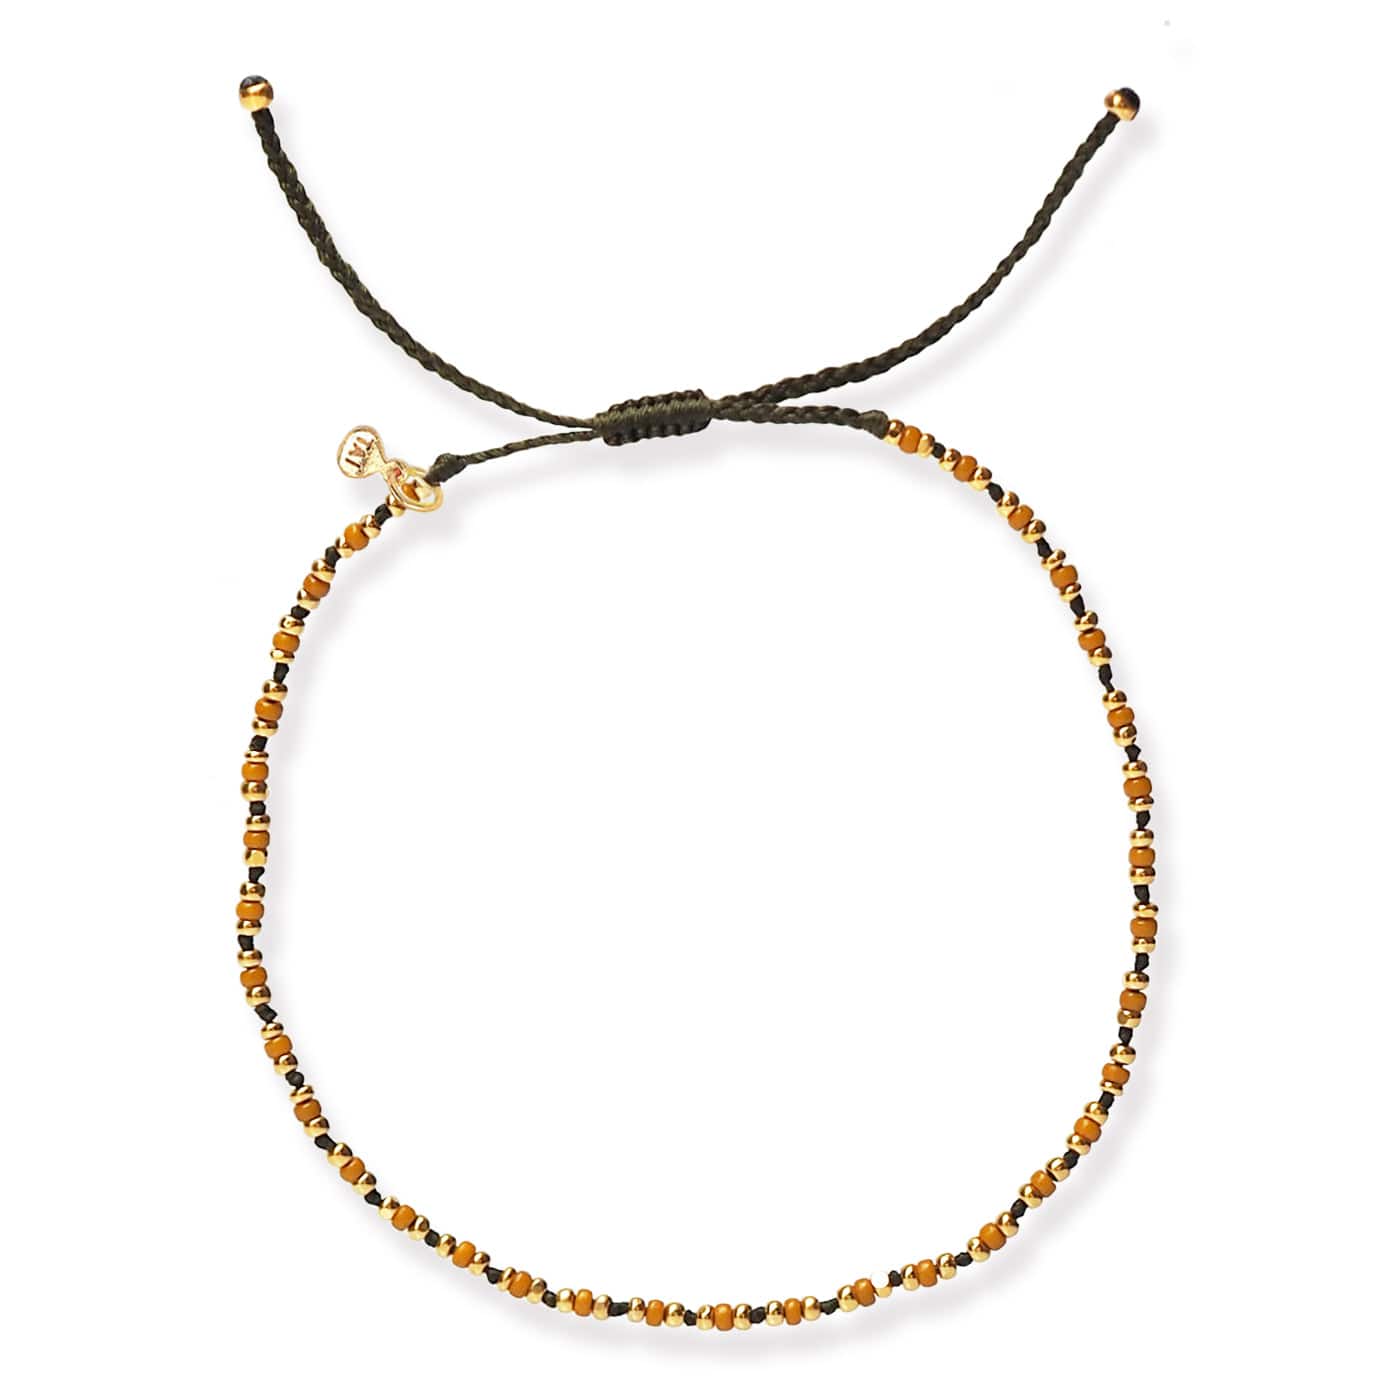 TAI JEWELRY Bracelet -9 Handmade Bracelets With Gold Bead Accents